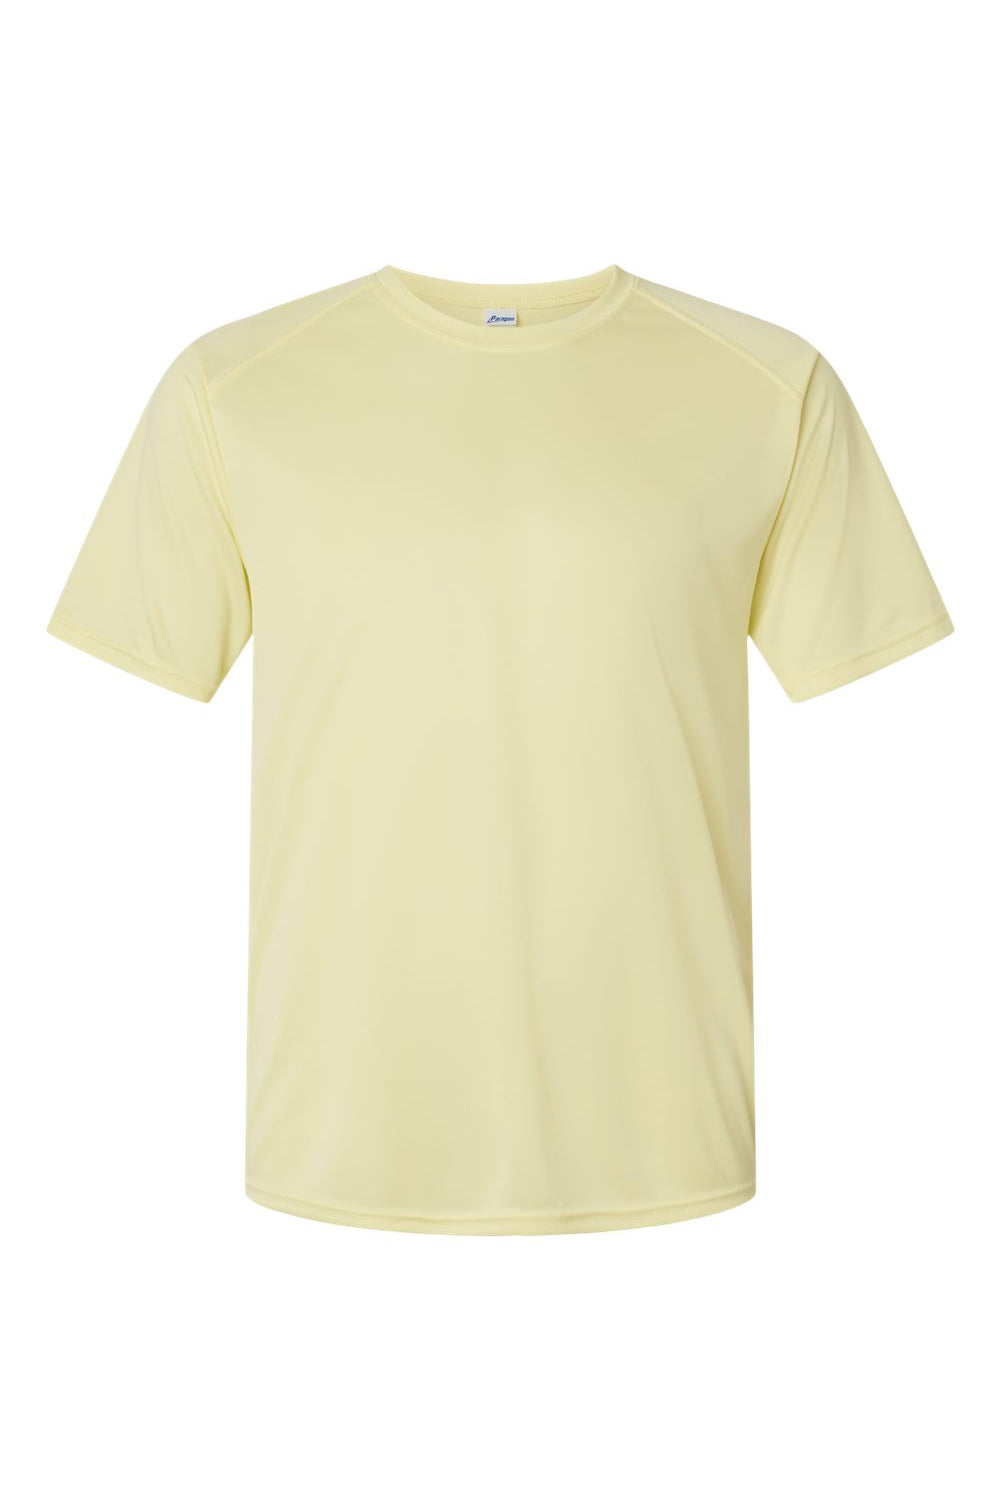 Paragon 200 Mens Islander Performance Short Sleeve Crewneck T-Shirt Pale Yellow Flat Front